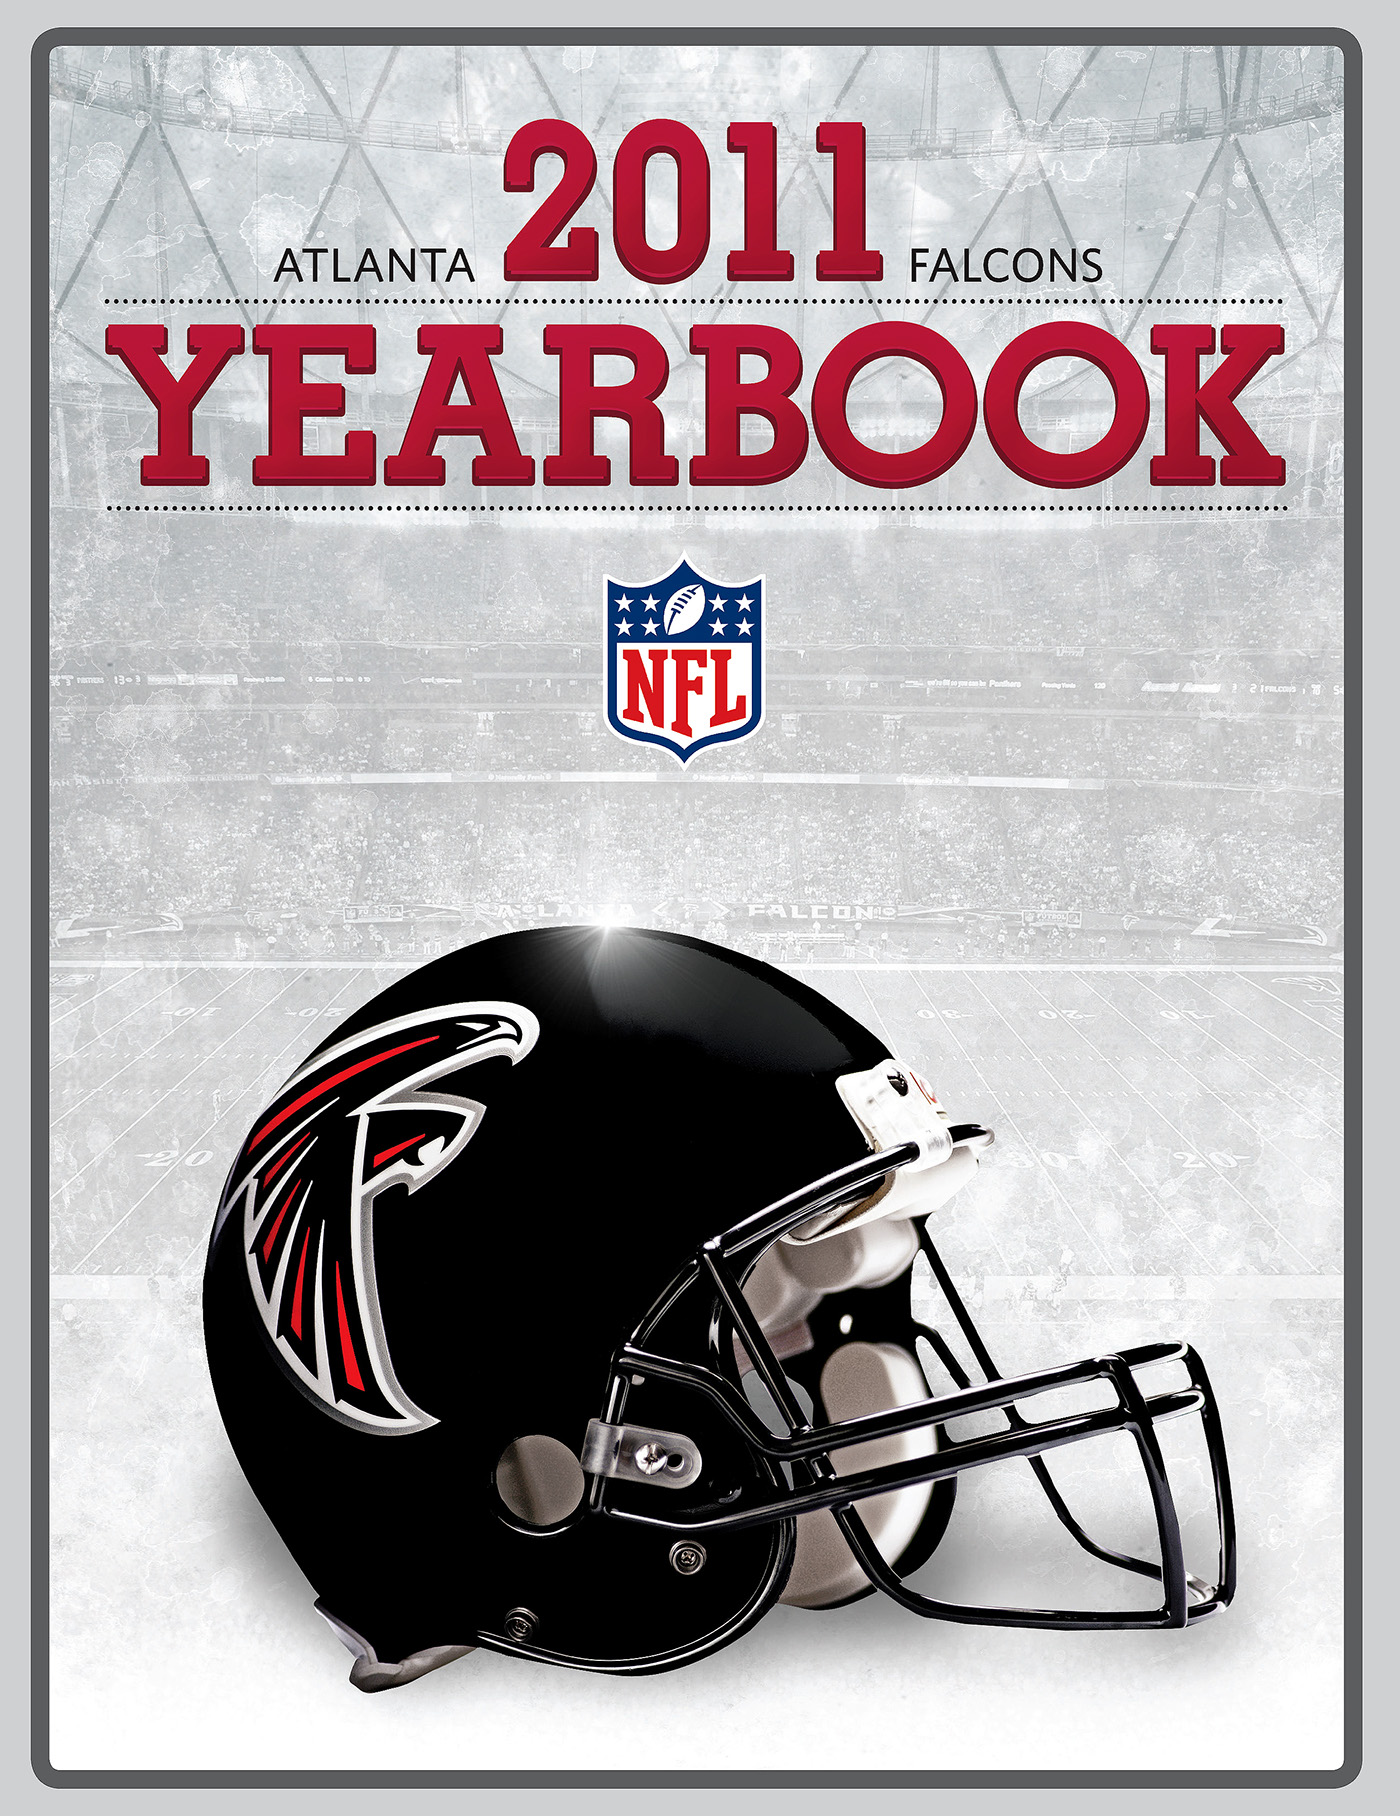 nfl Atlanta Falcons falcons atlanta Georgia art design creative marketing   sports print Web